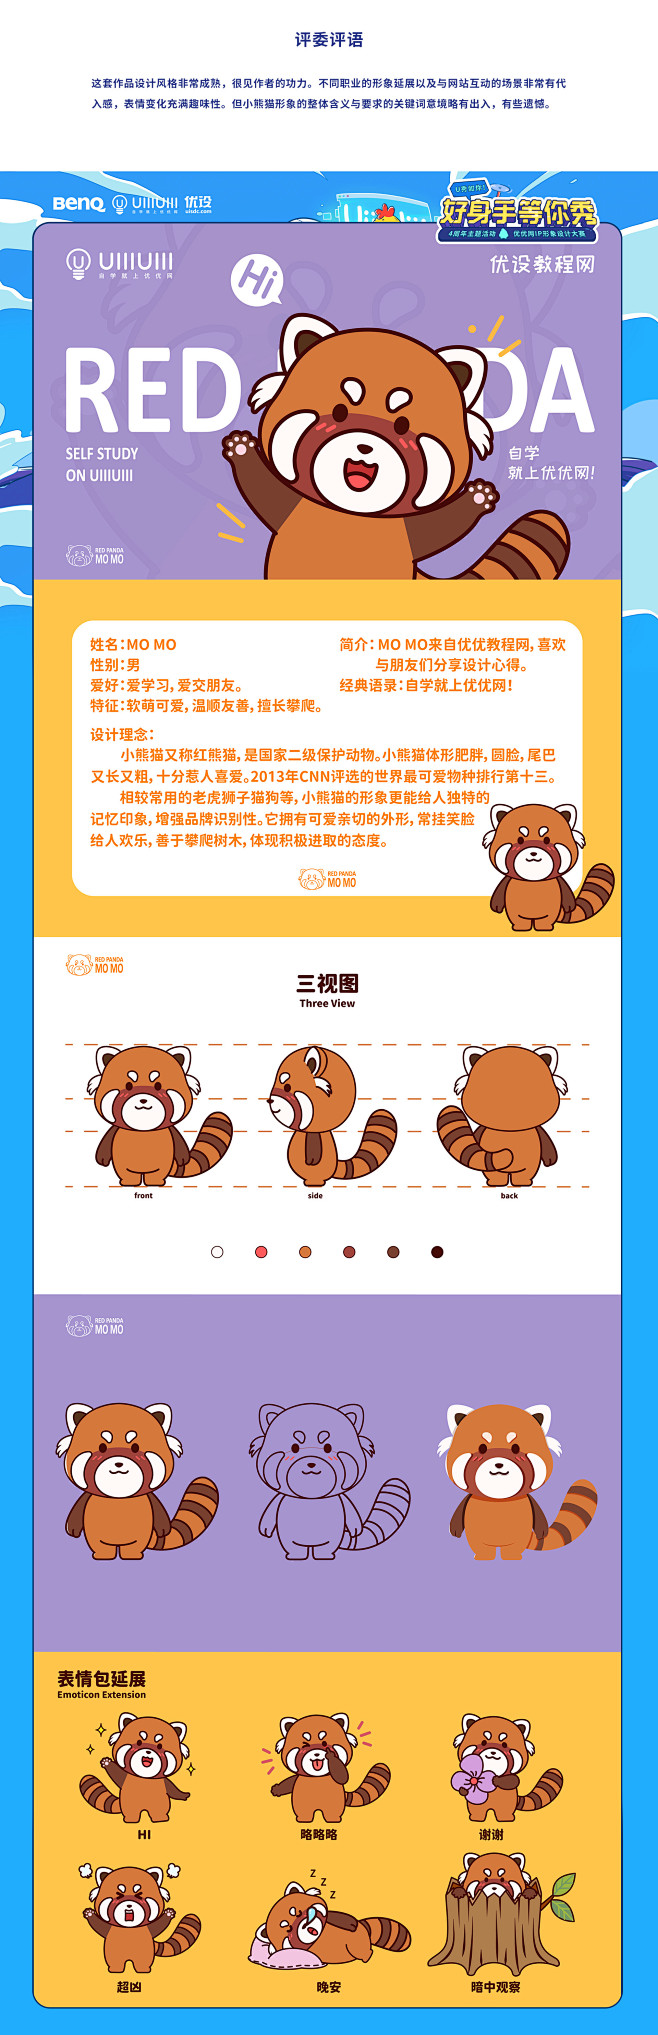 IP/吉祥物设计-小熊猫